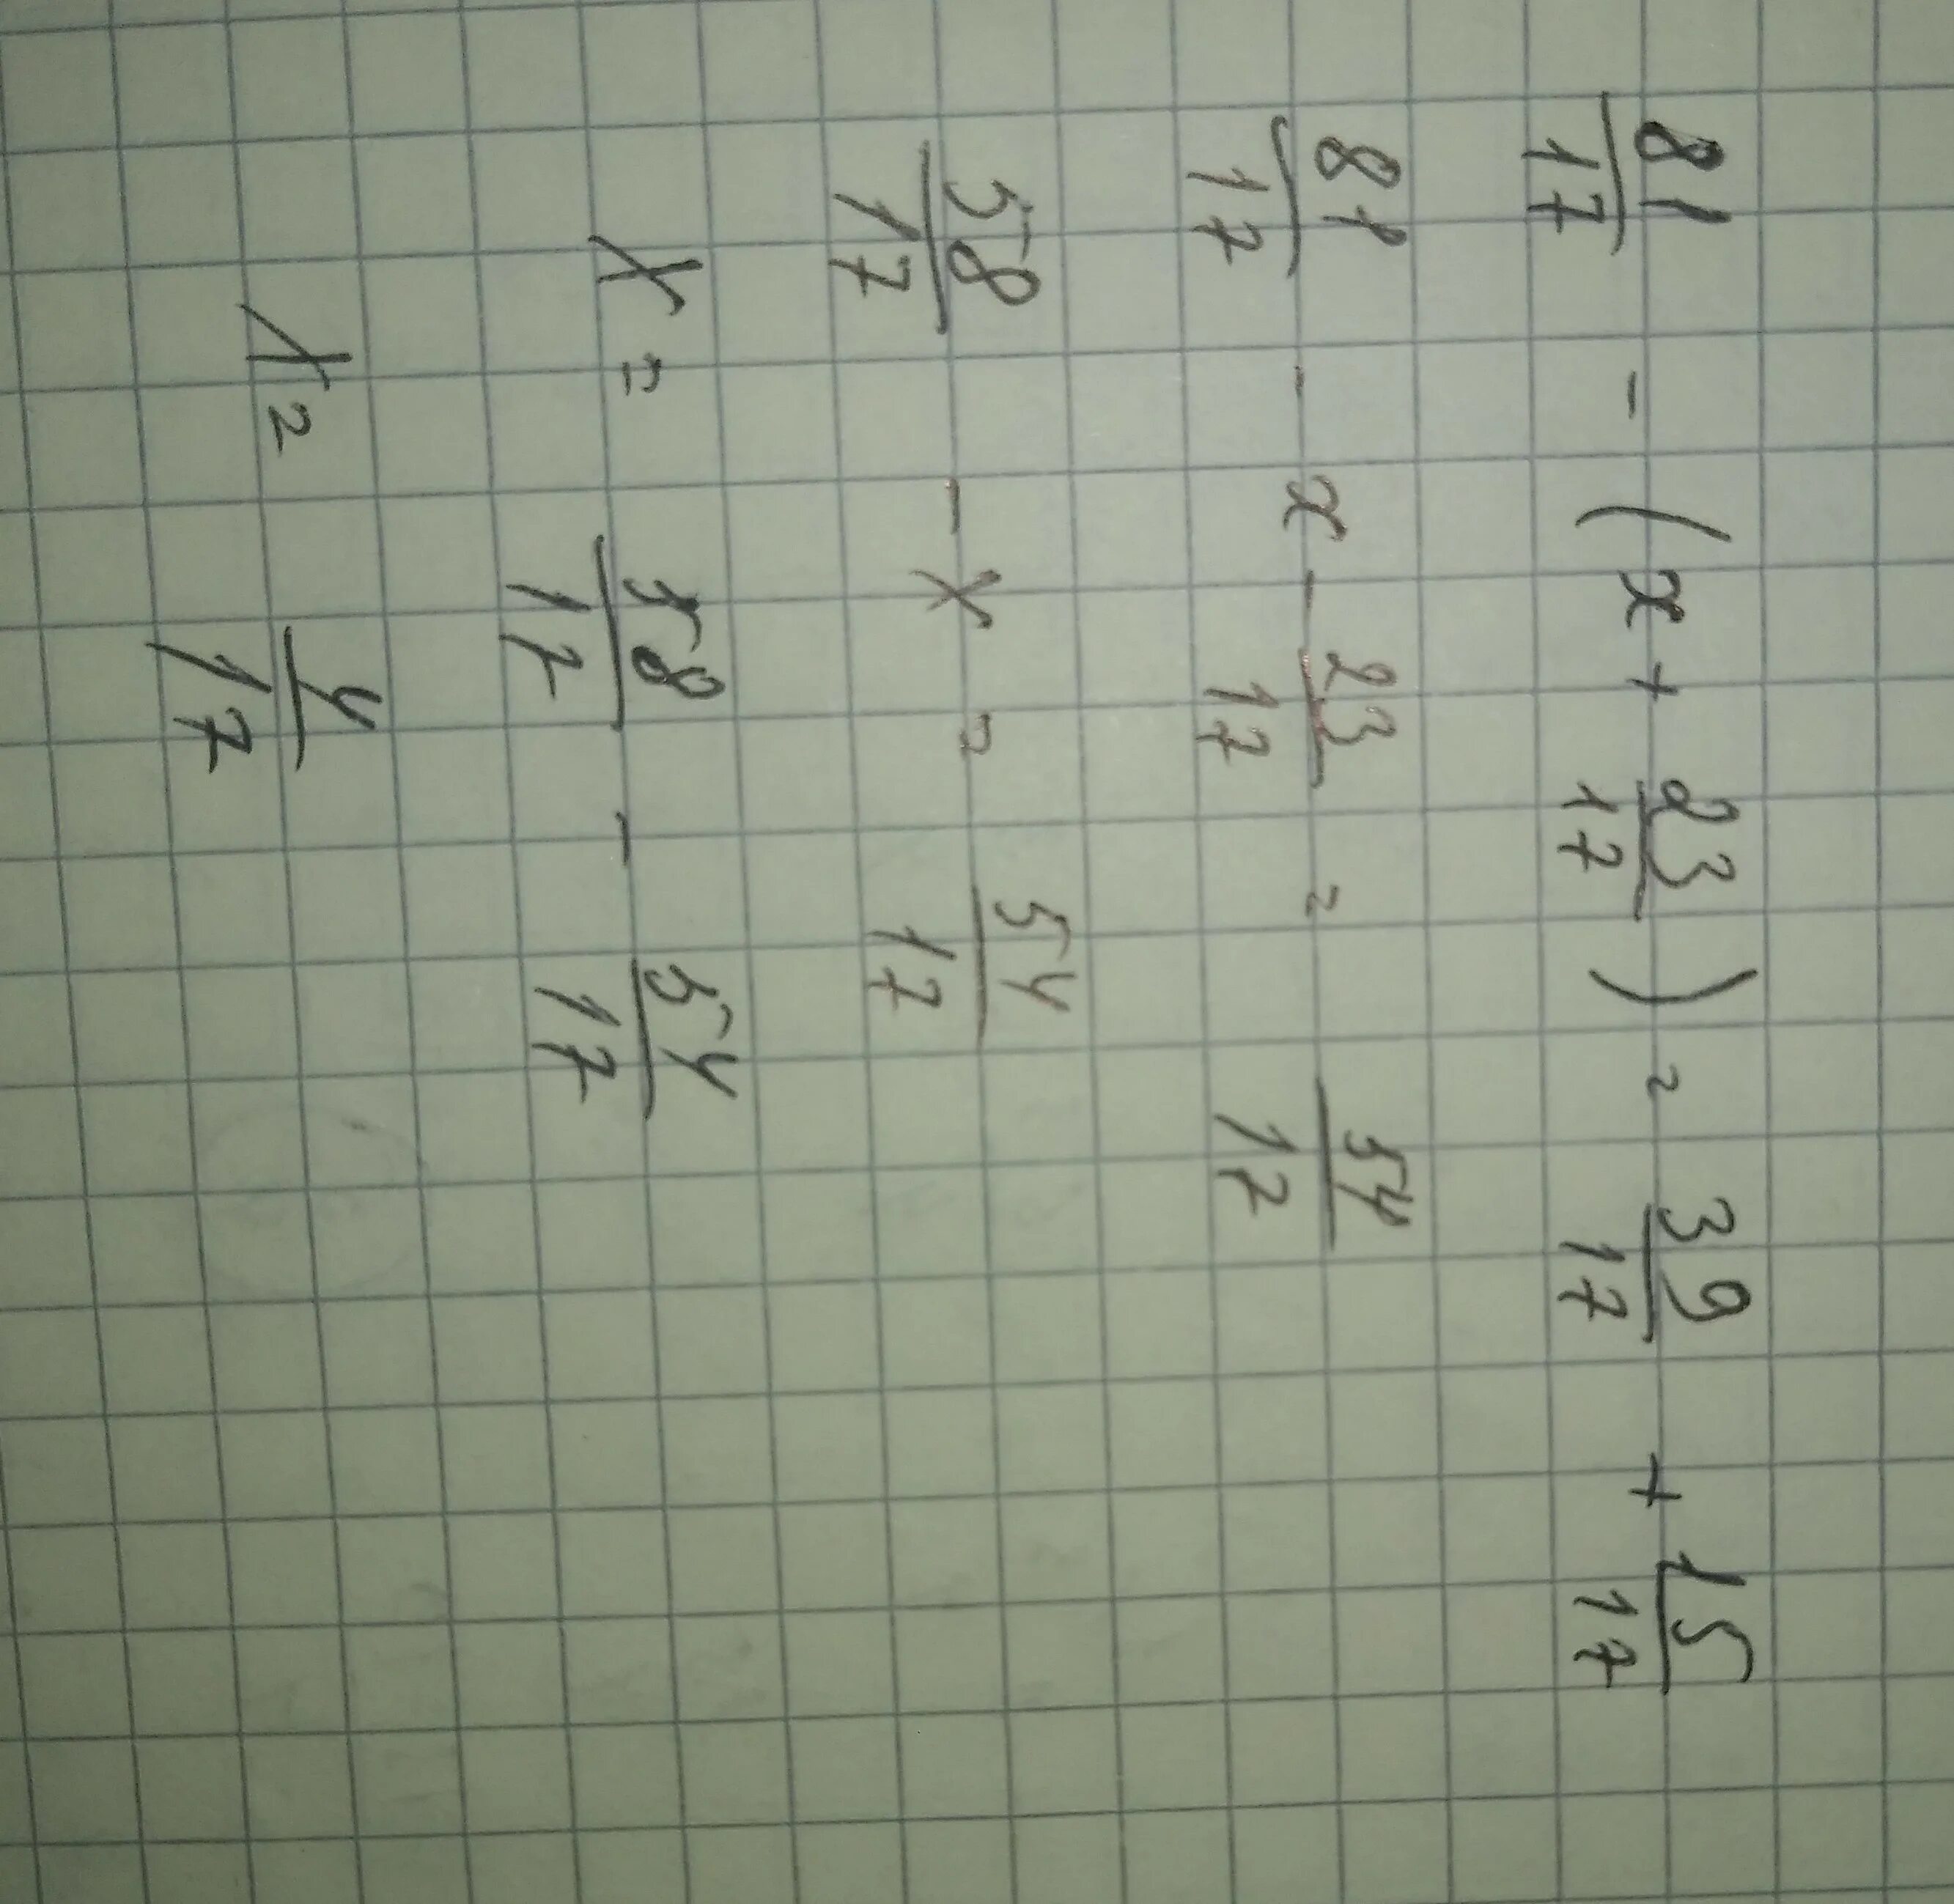 9 плюс 3 17. Один минус пятнадцать Семнадцатых. Икс минус 17. (Х+3_17)+4_17=1.